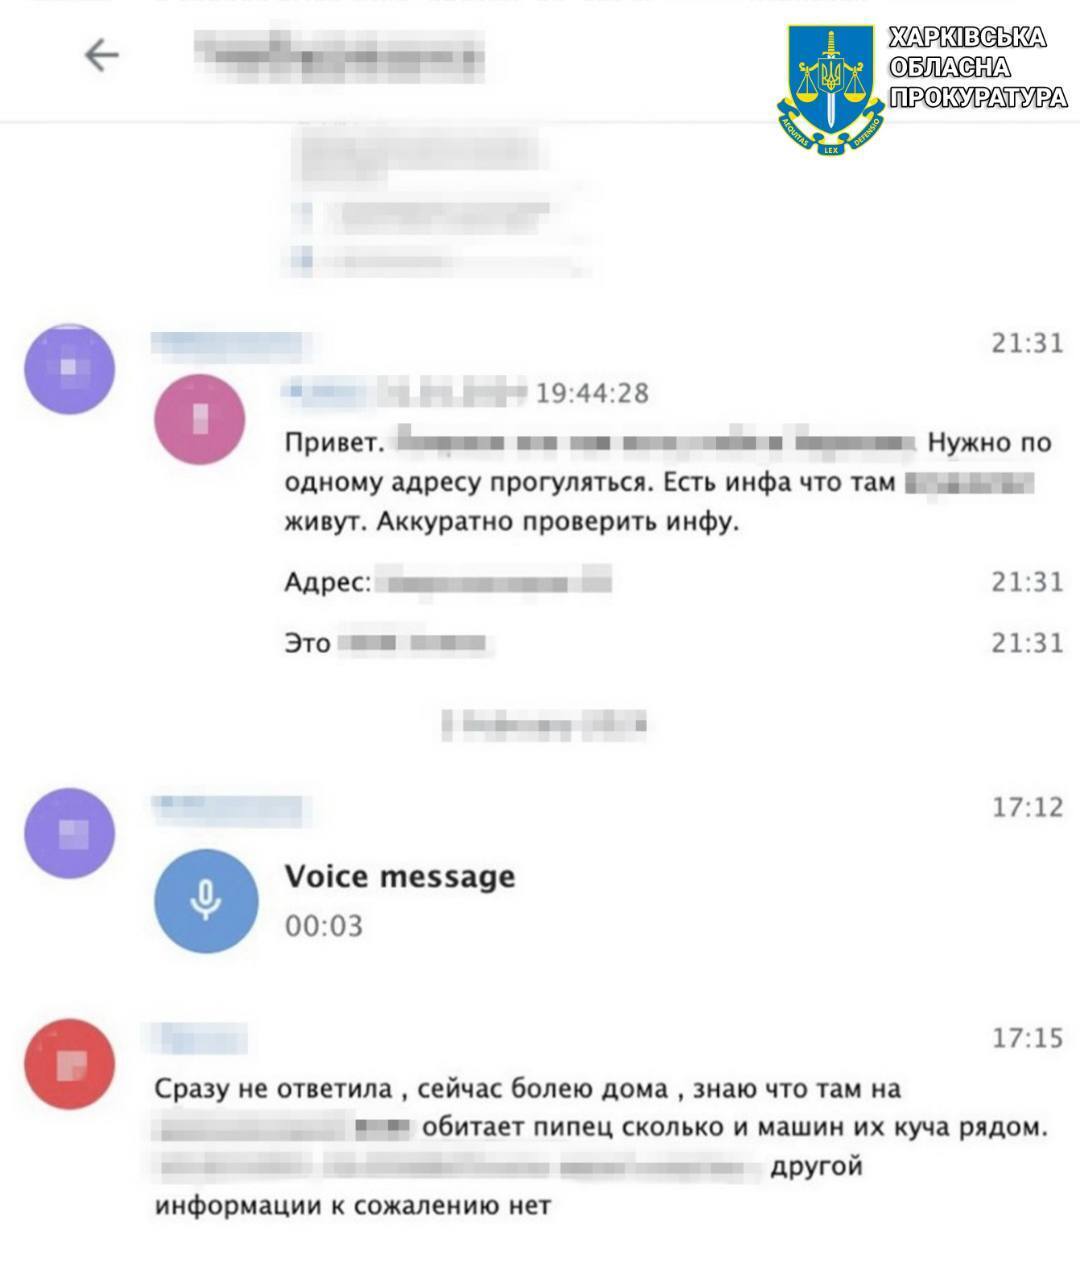 Харківська працівниця дитсадка передавала дані про ЗСУ окупантам